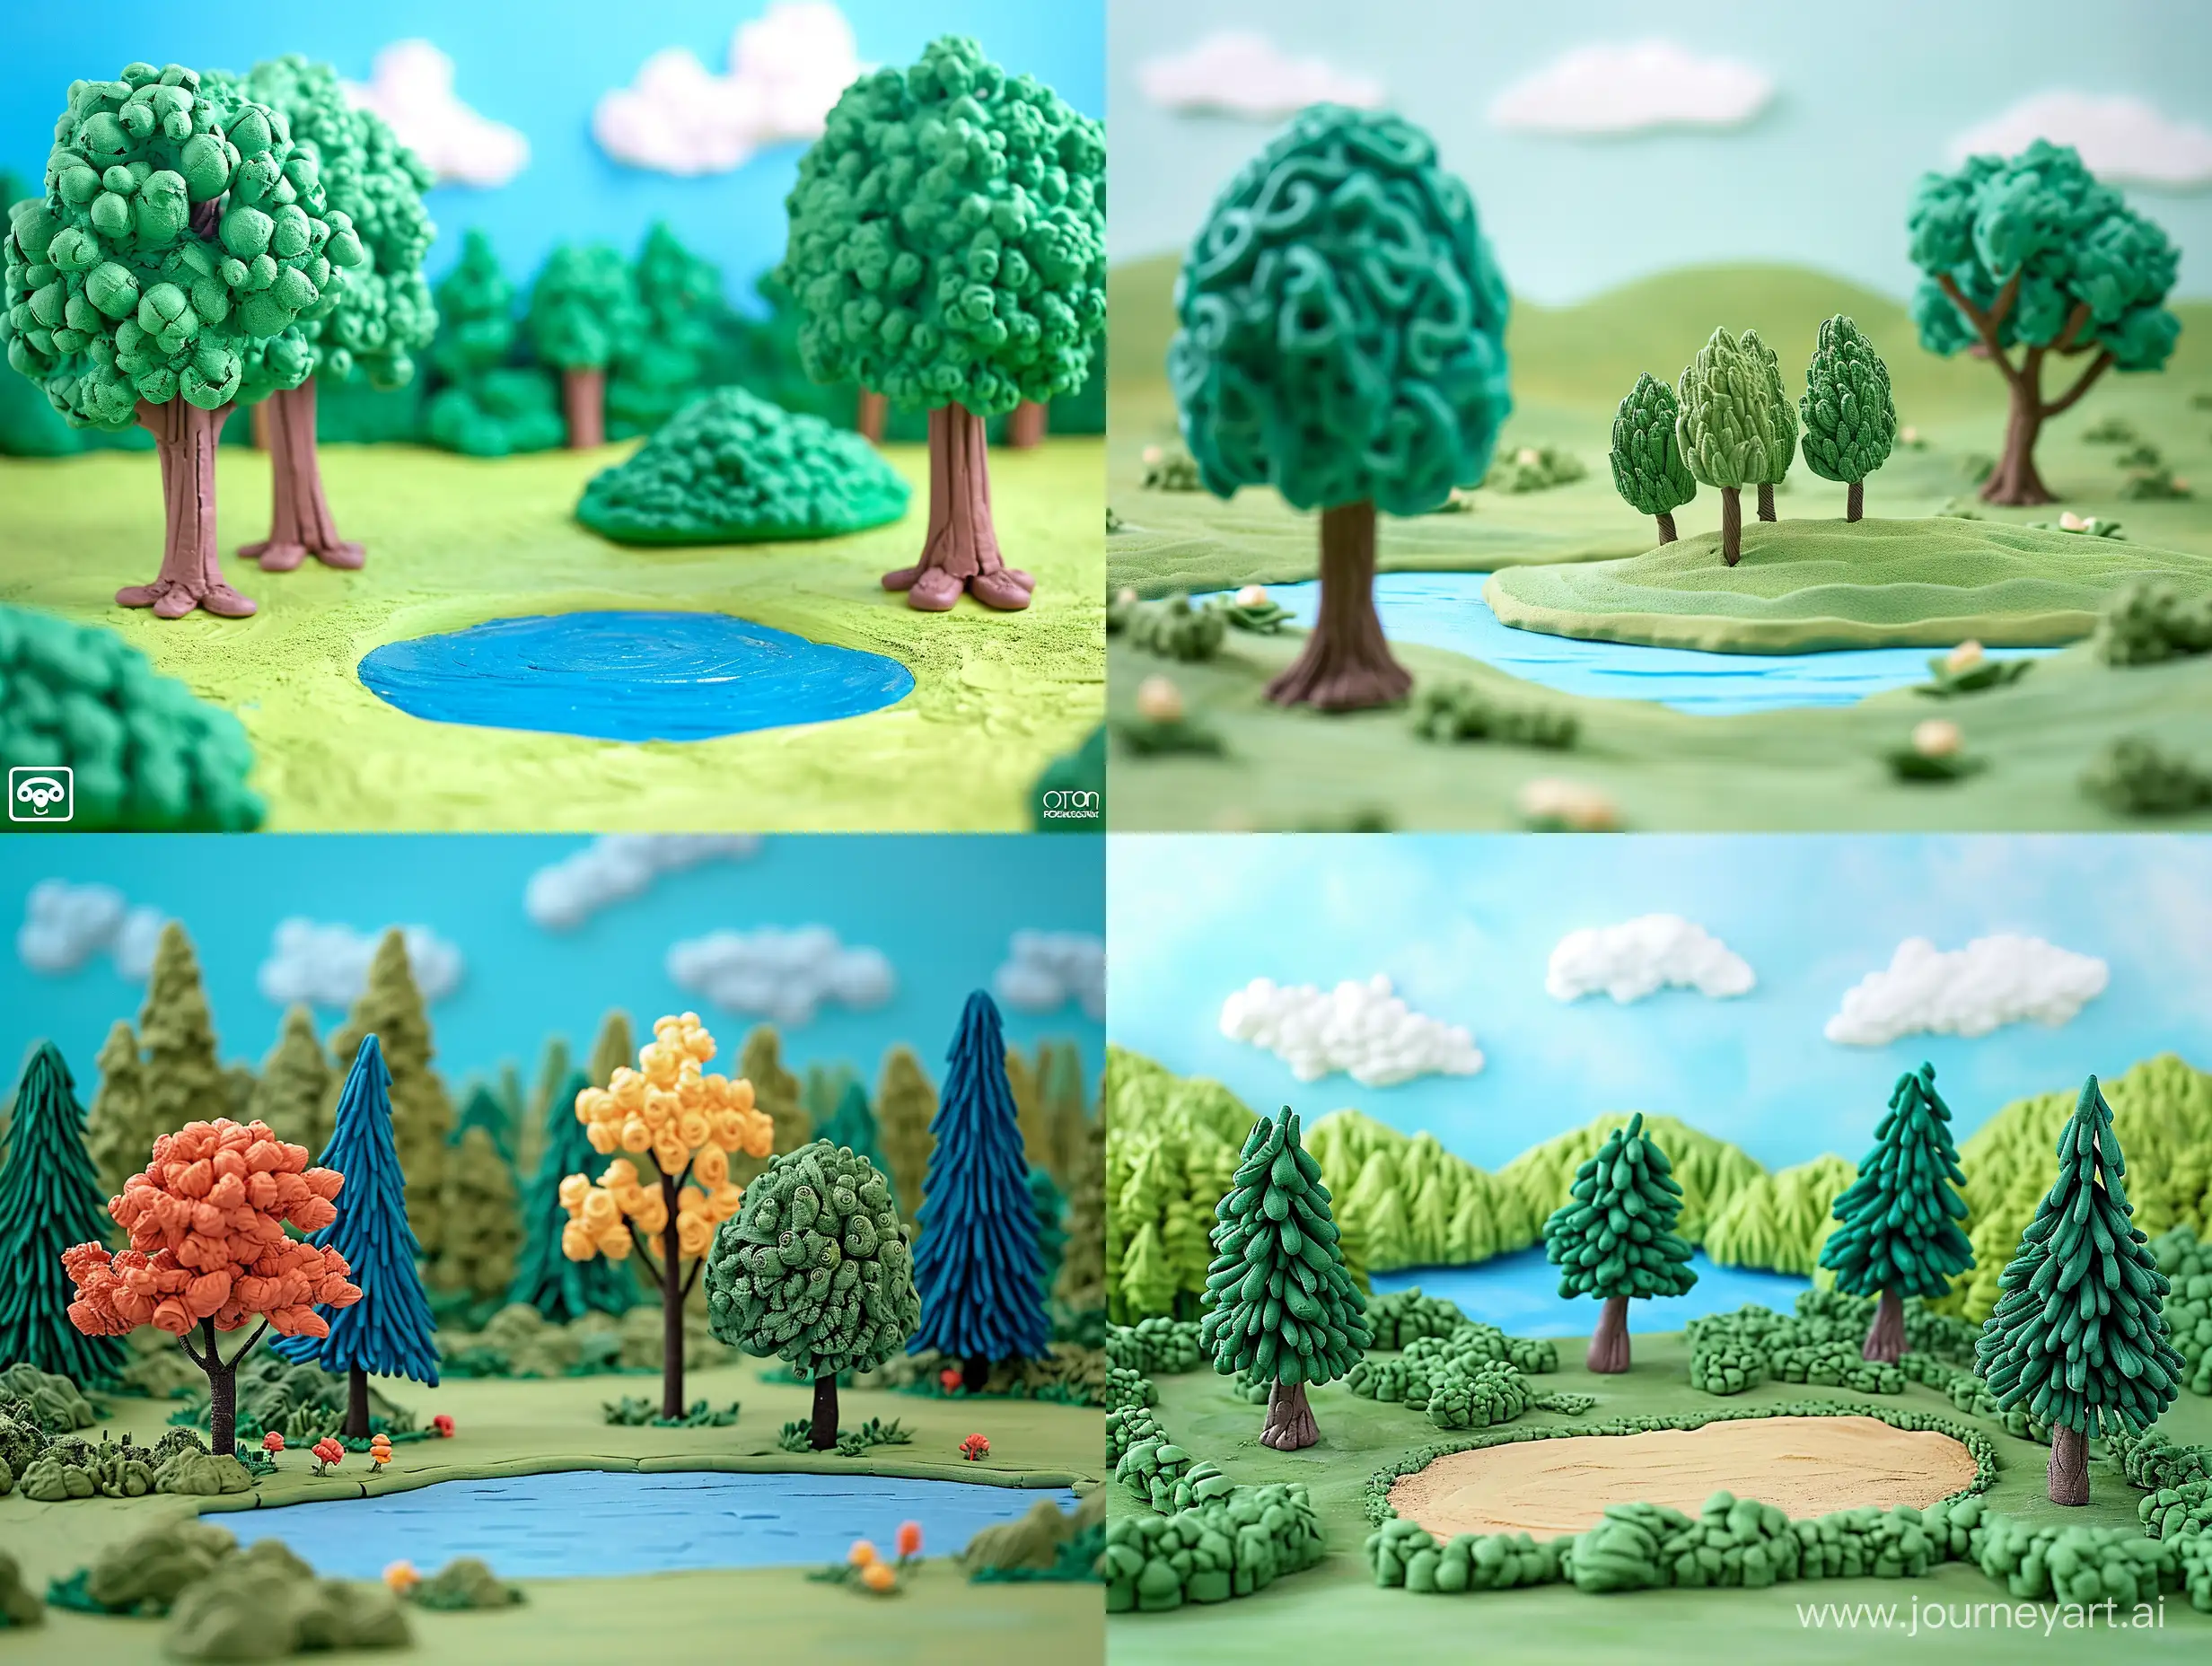 Vibrant-Plasticine-Park-Landscape-with-Colorful-Trees